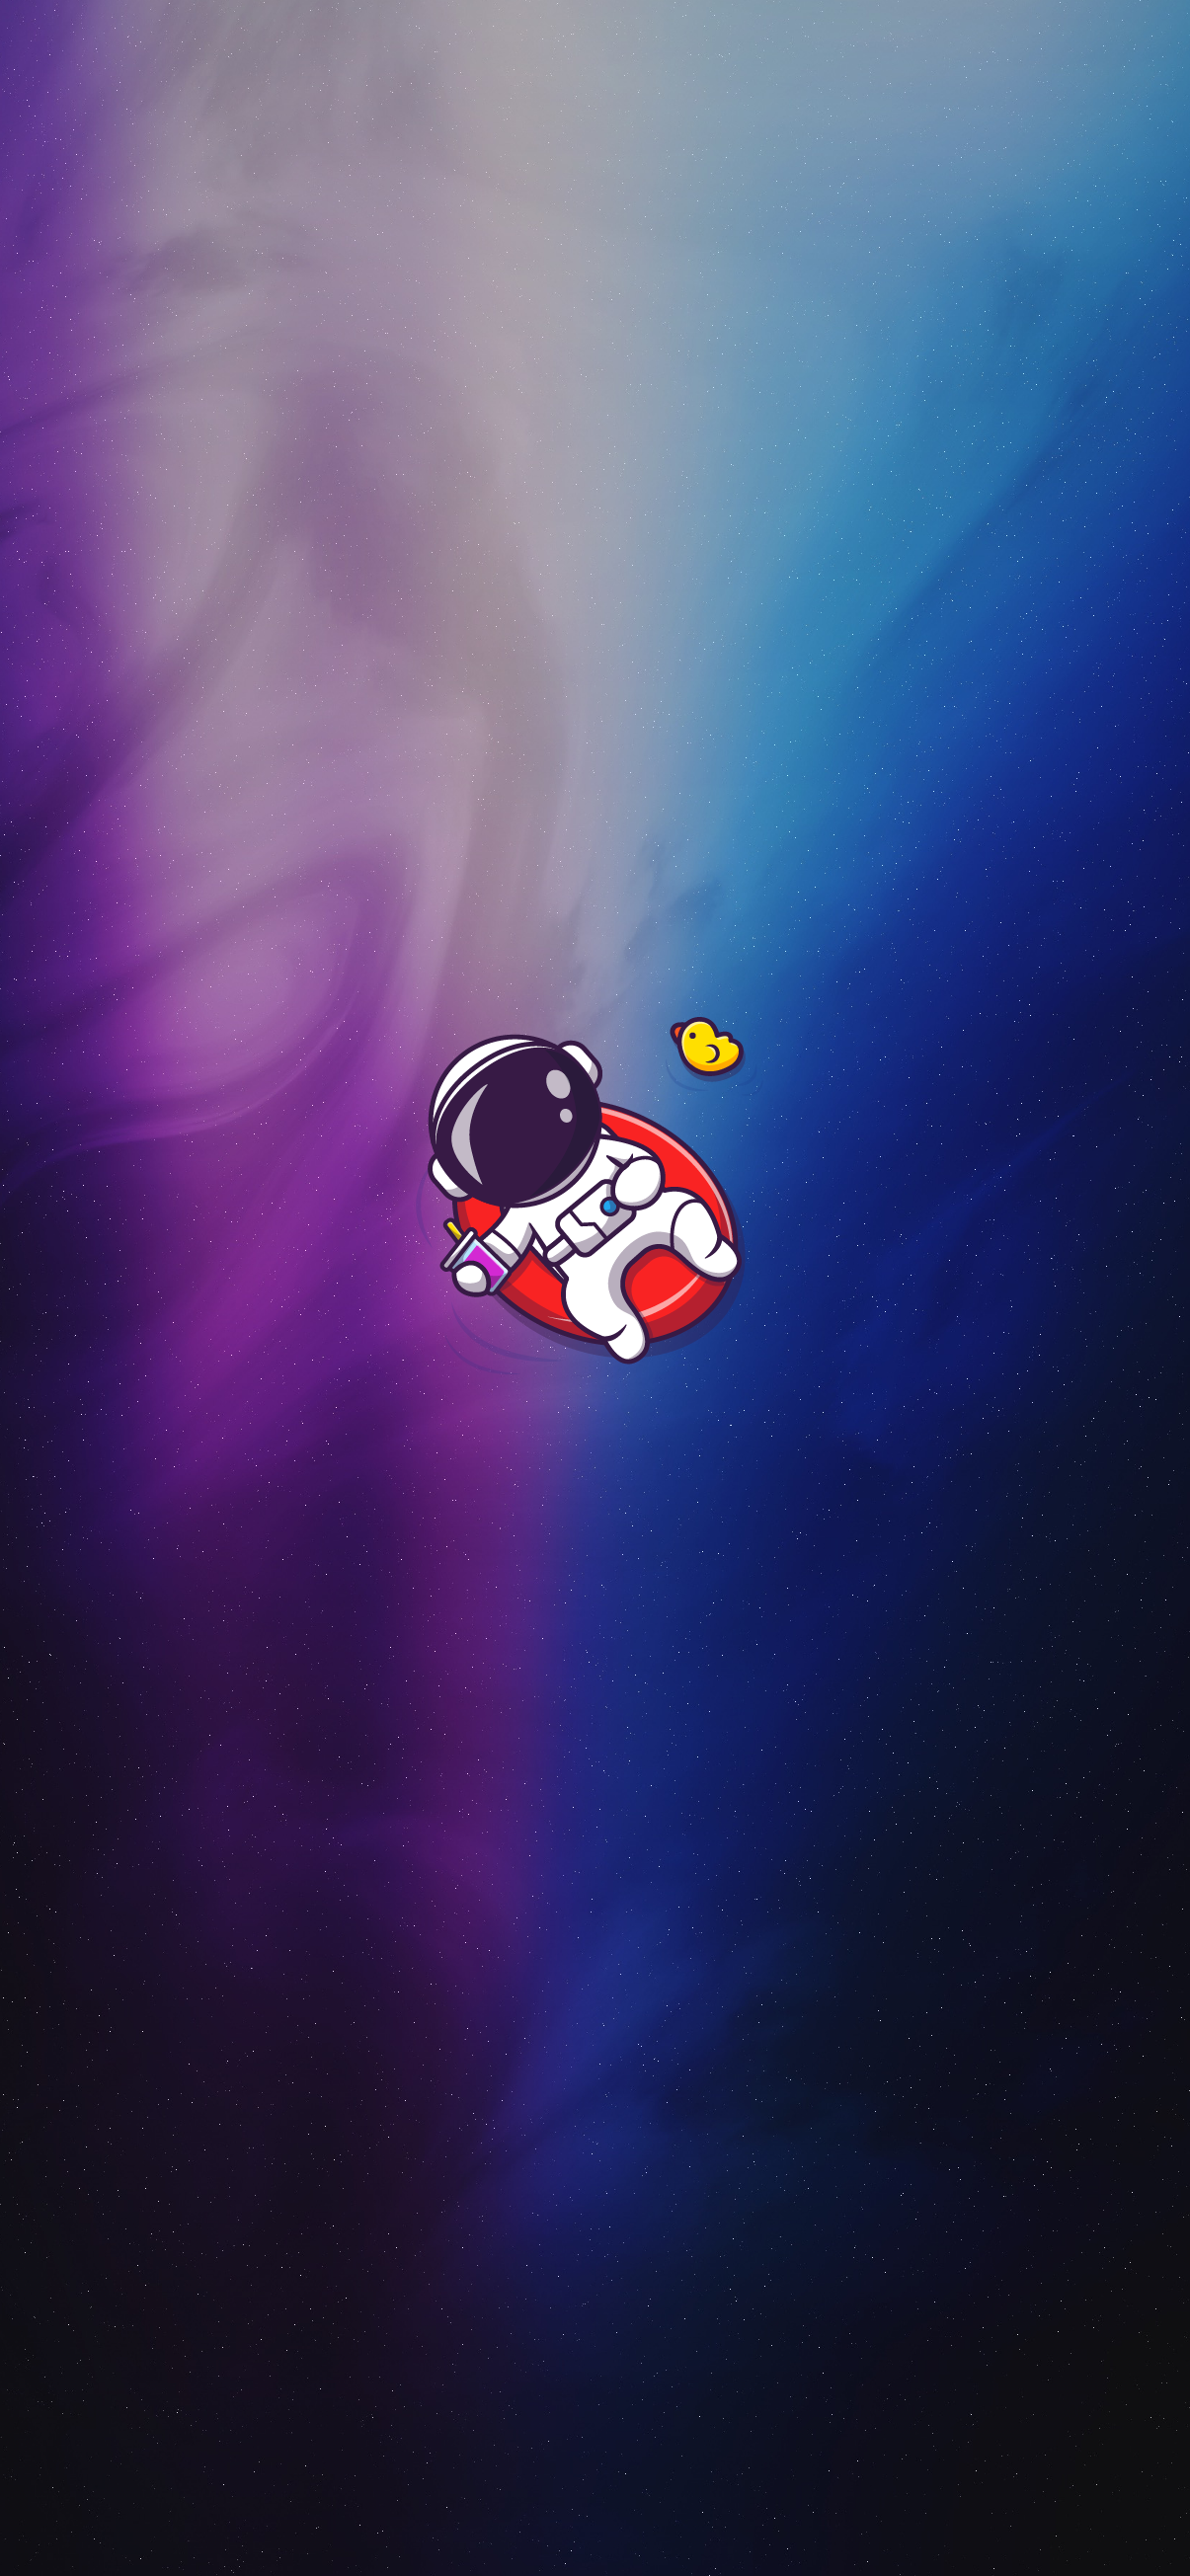 Cute astronaut phone wallpaper 4k